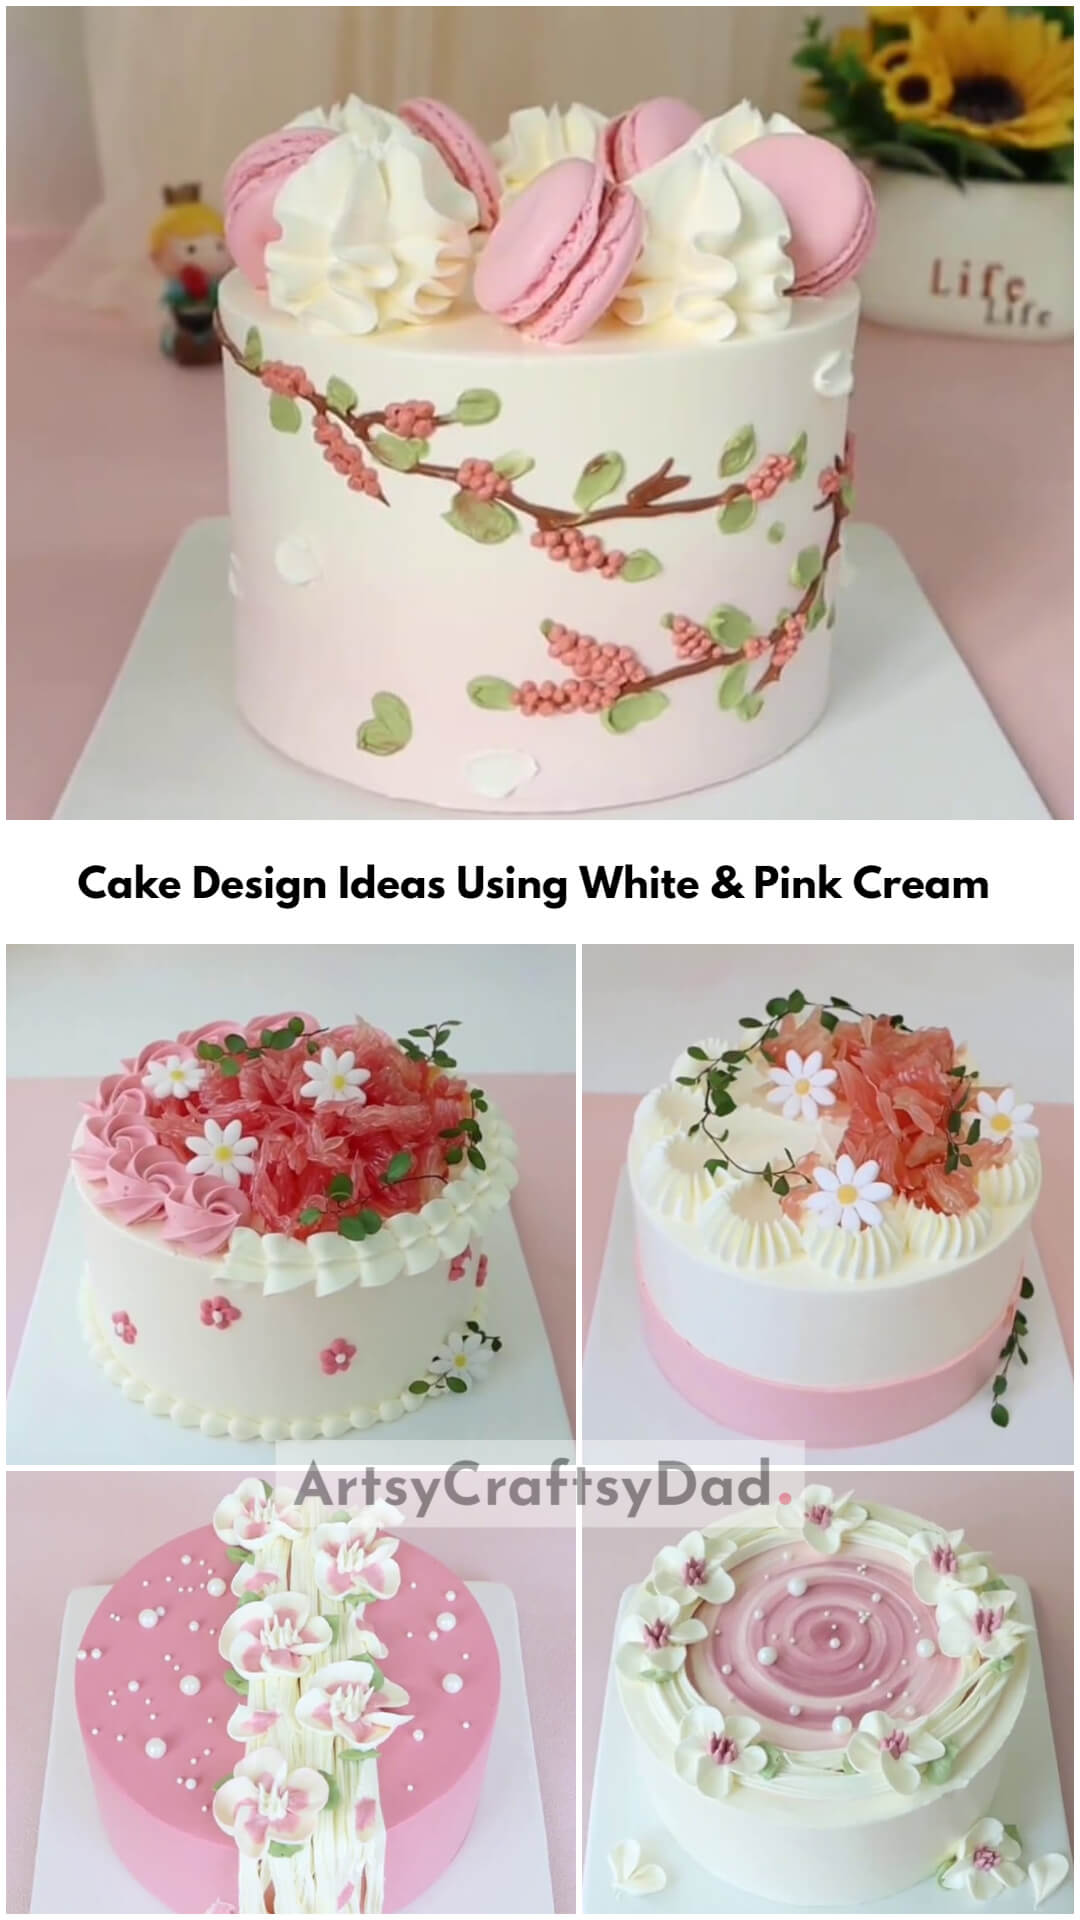 Cake Design Ideas Using White & Pink Cream